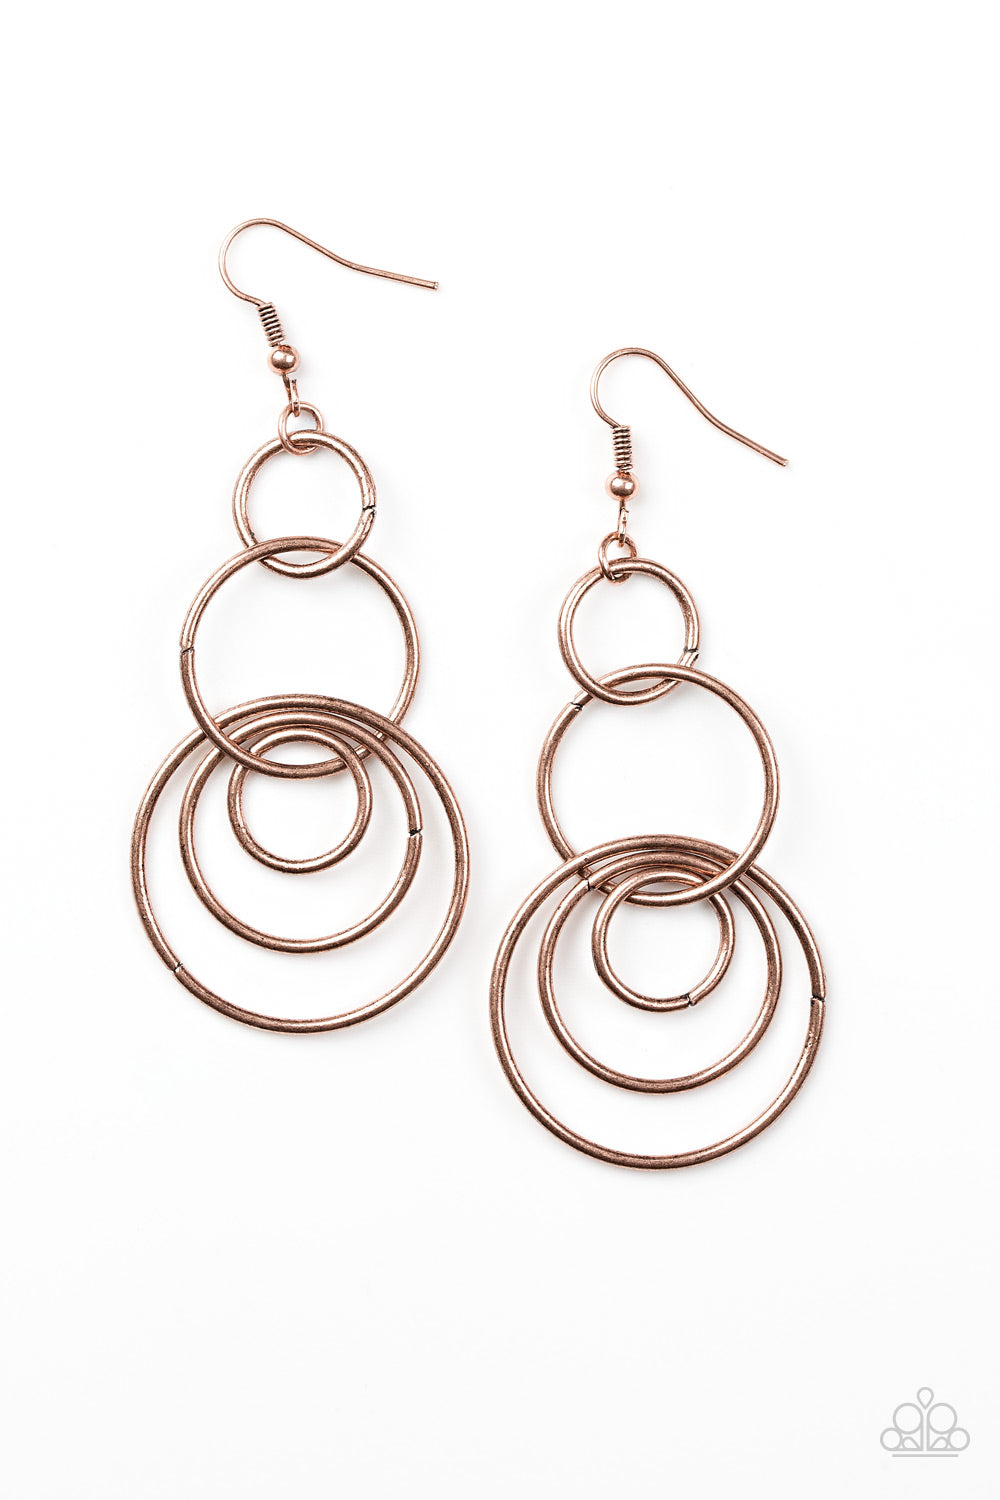 Paparazzi Earrings - Chic Circles - Copper